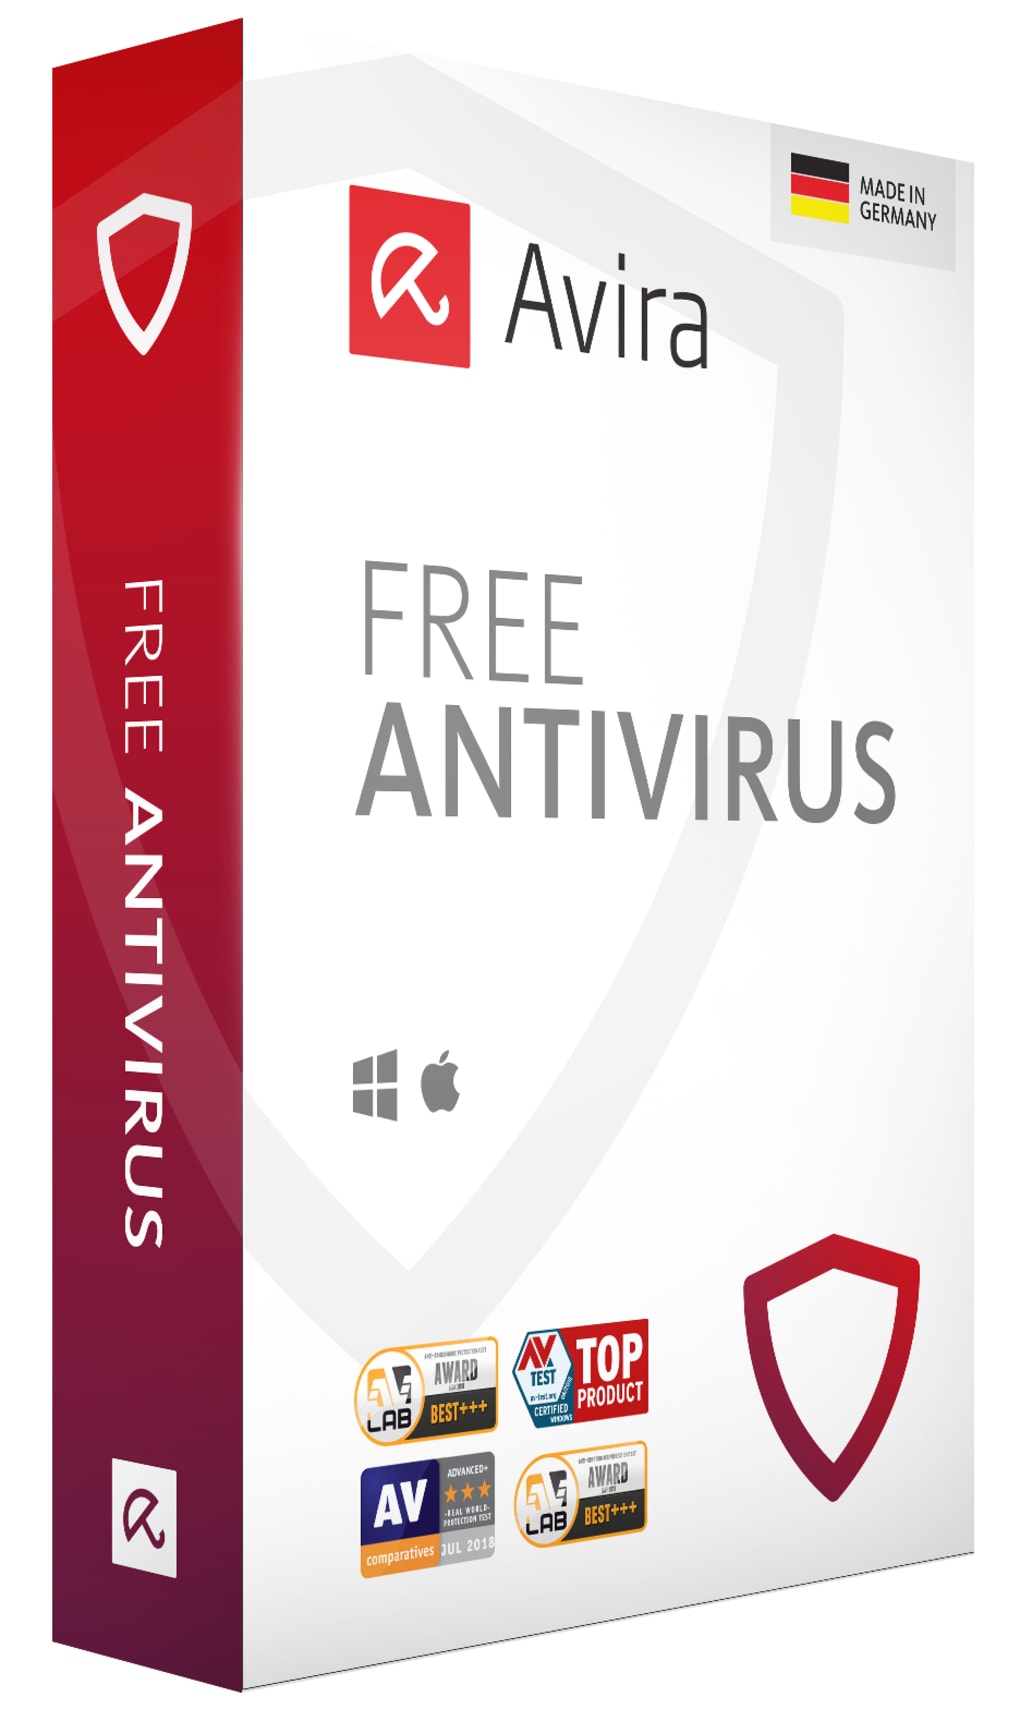 whats a good free antivirus for mac